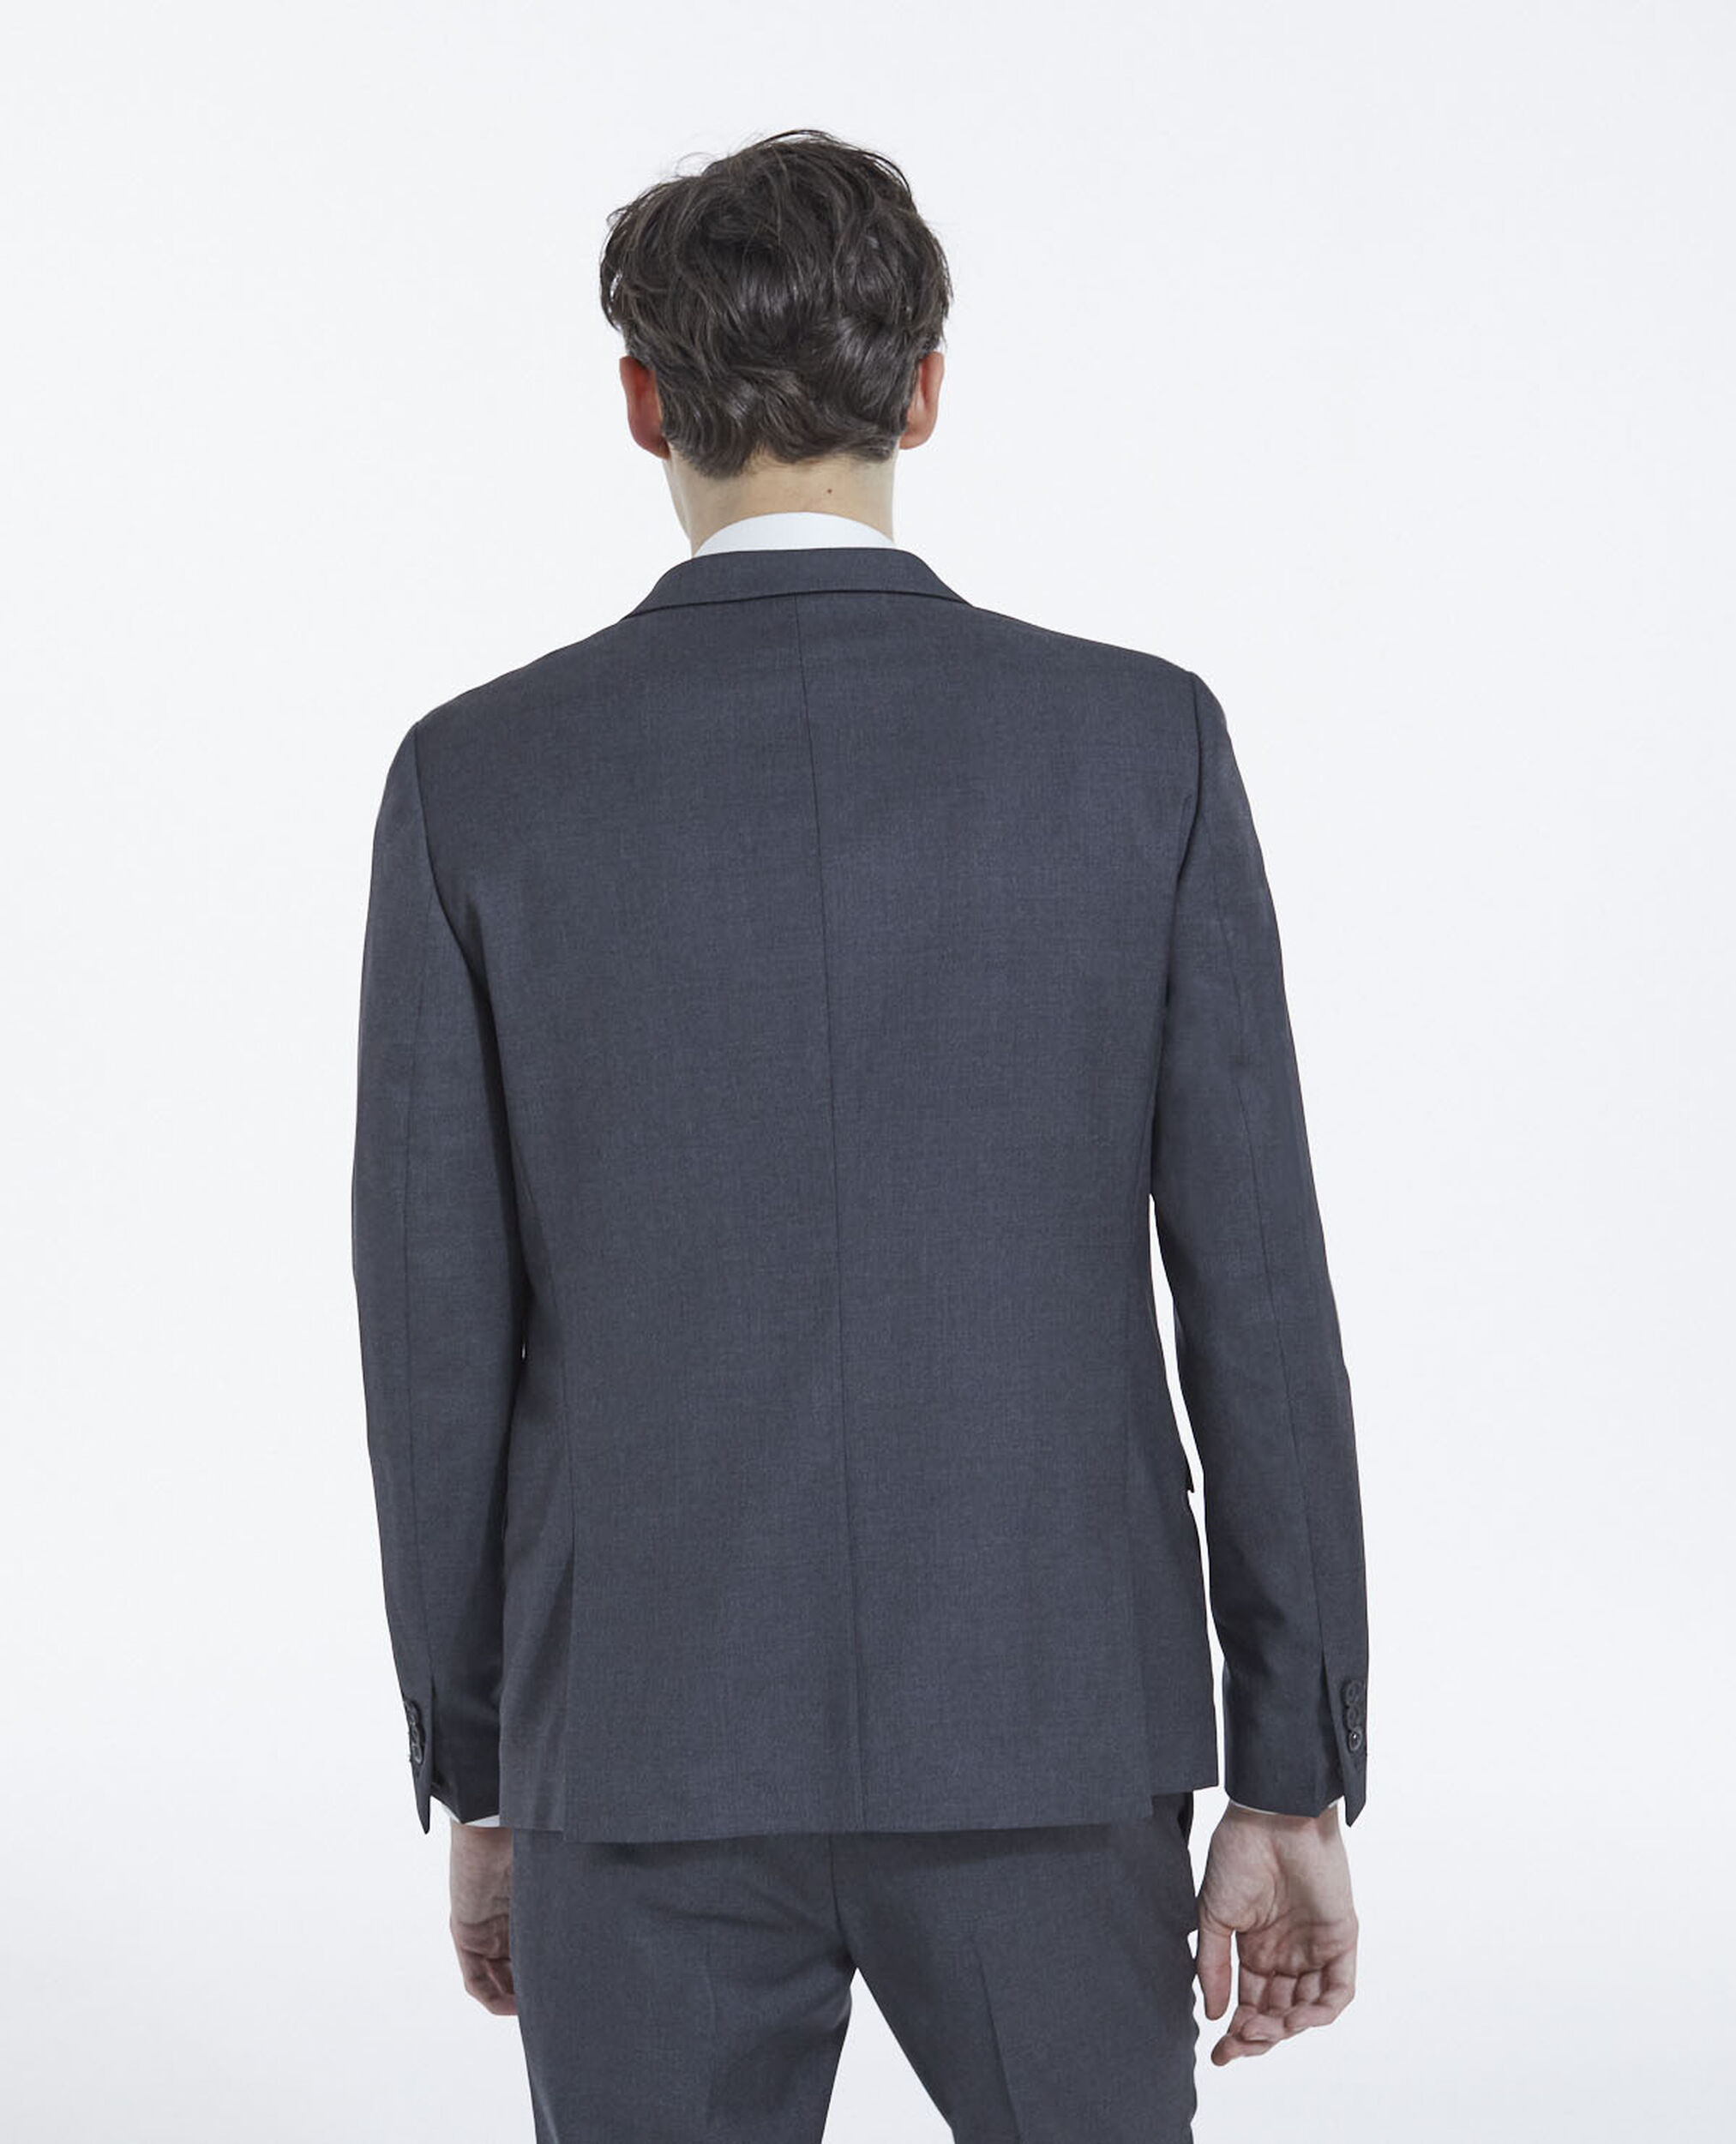 Gray suit jacket, DARK GREY, hi-res image number null